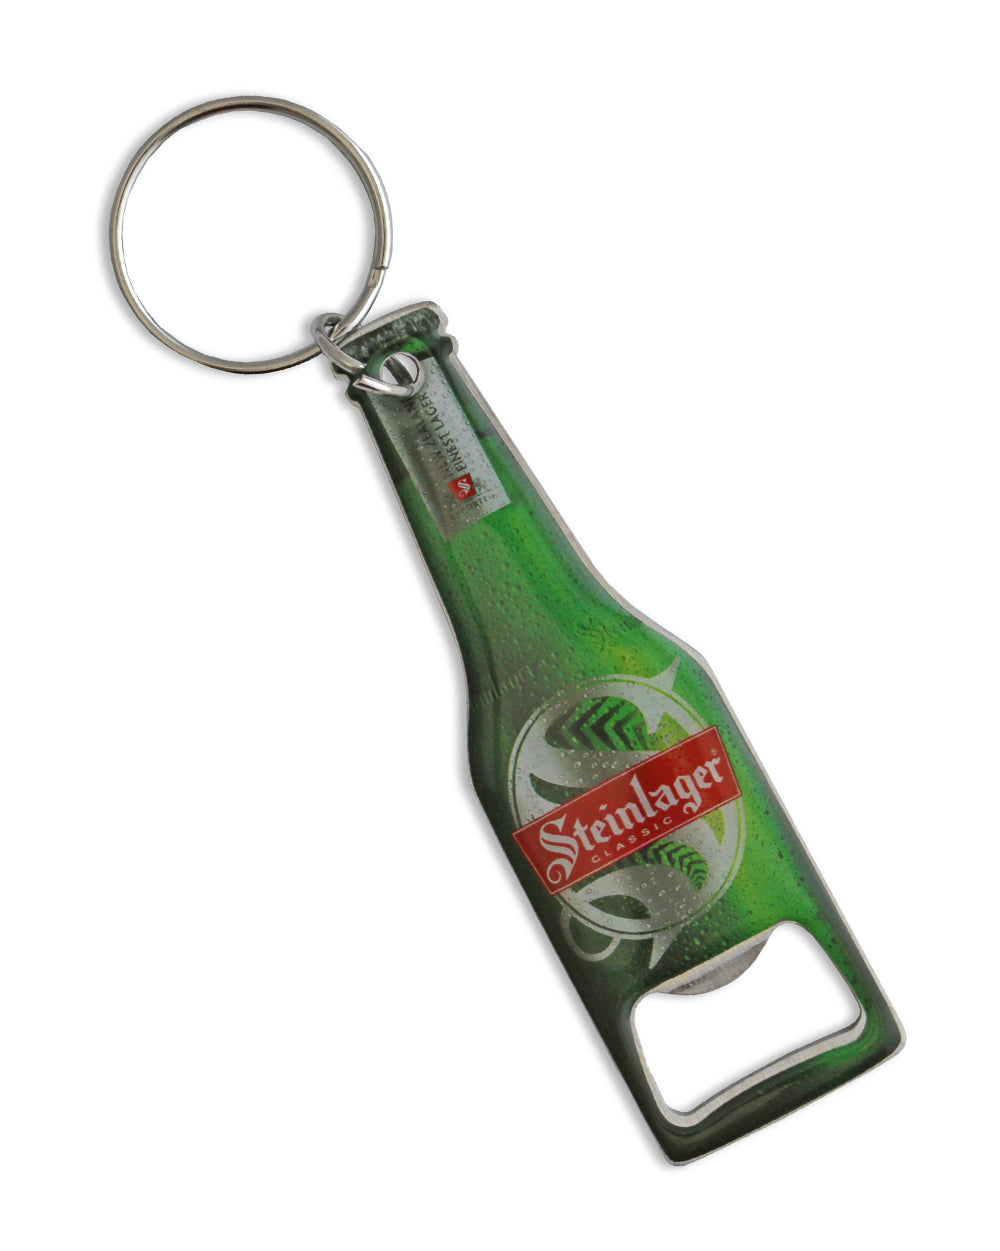 Steinlager Bottle Opener Keyring - Bottle -  Beer Gear Apparel & Merchandise - Speights - Lion Red - VB - Tokyo Dy merch